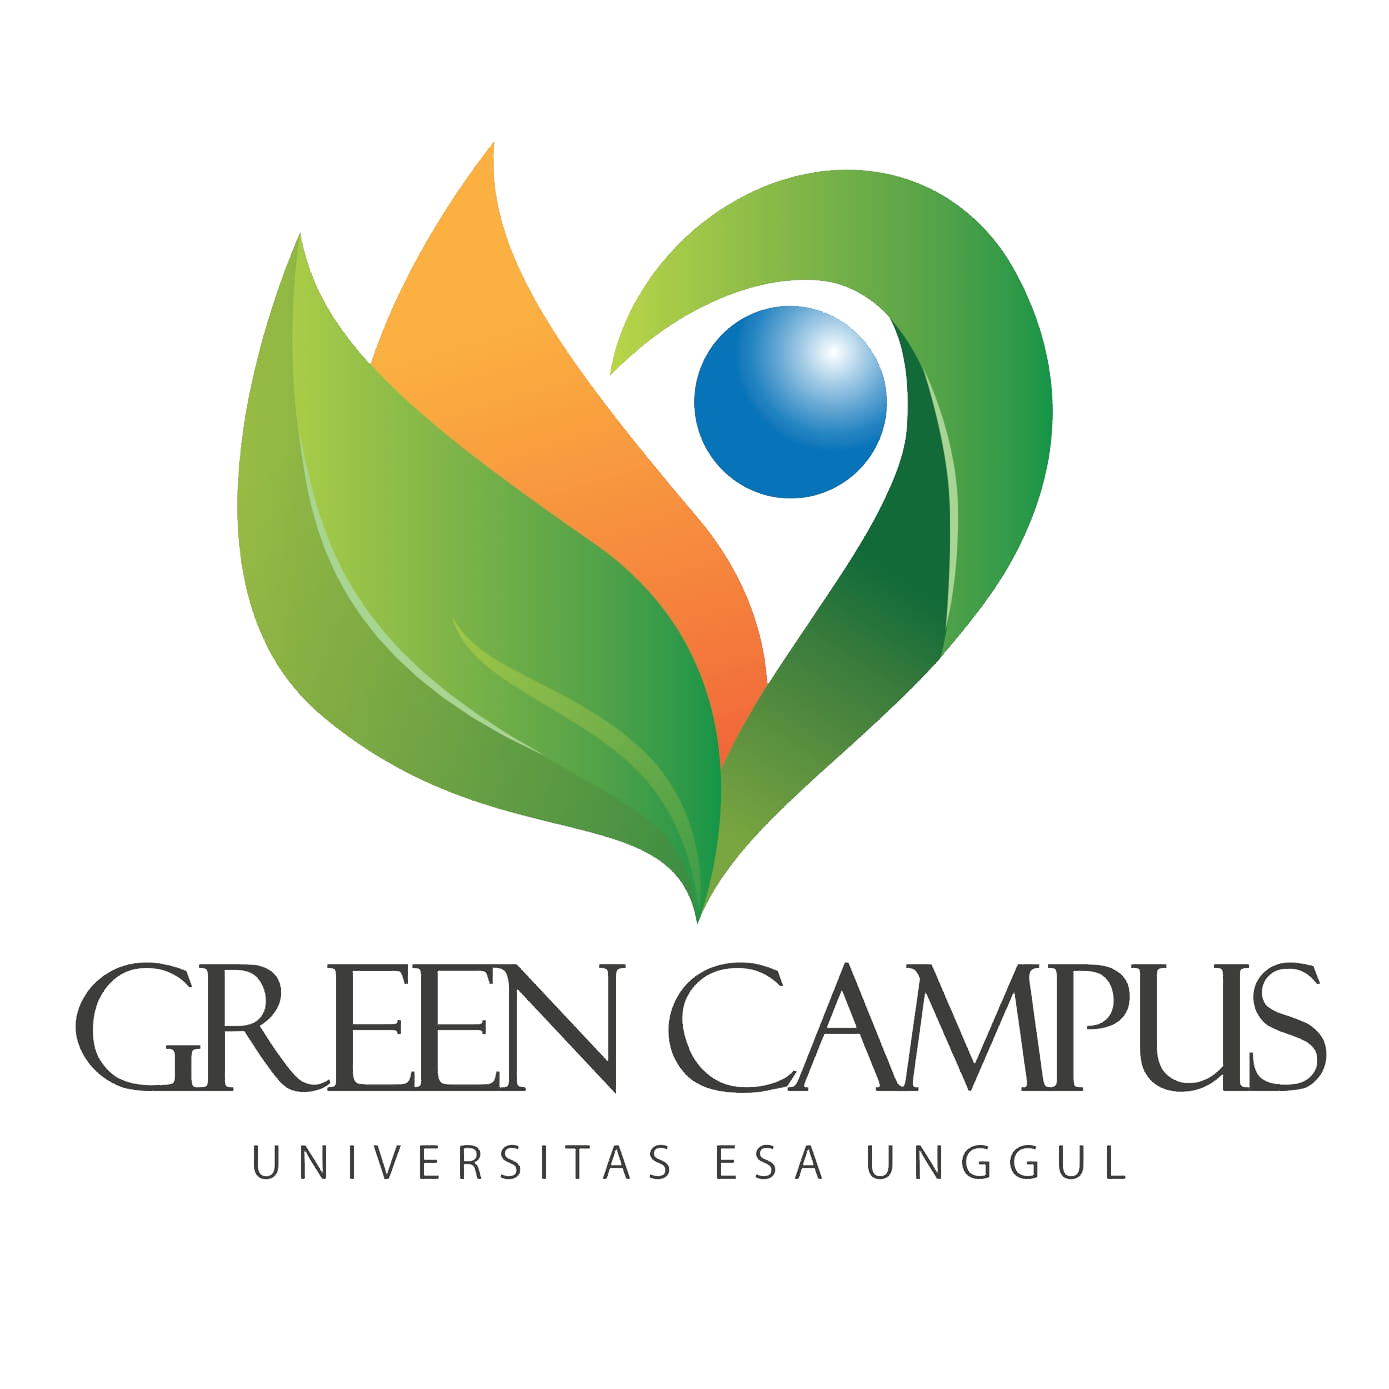 Green Campus Universitas Esa Unggul